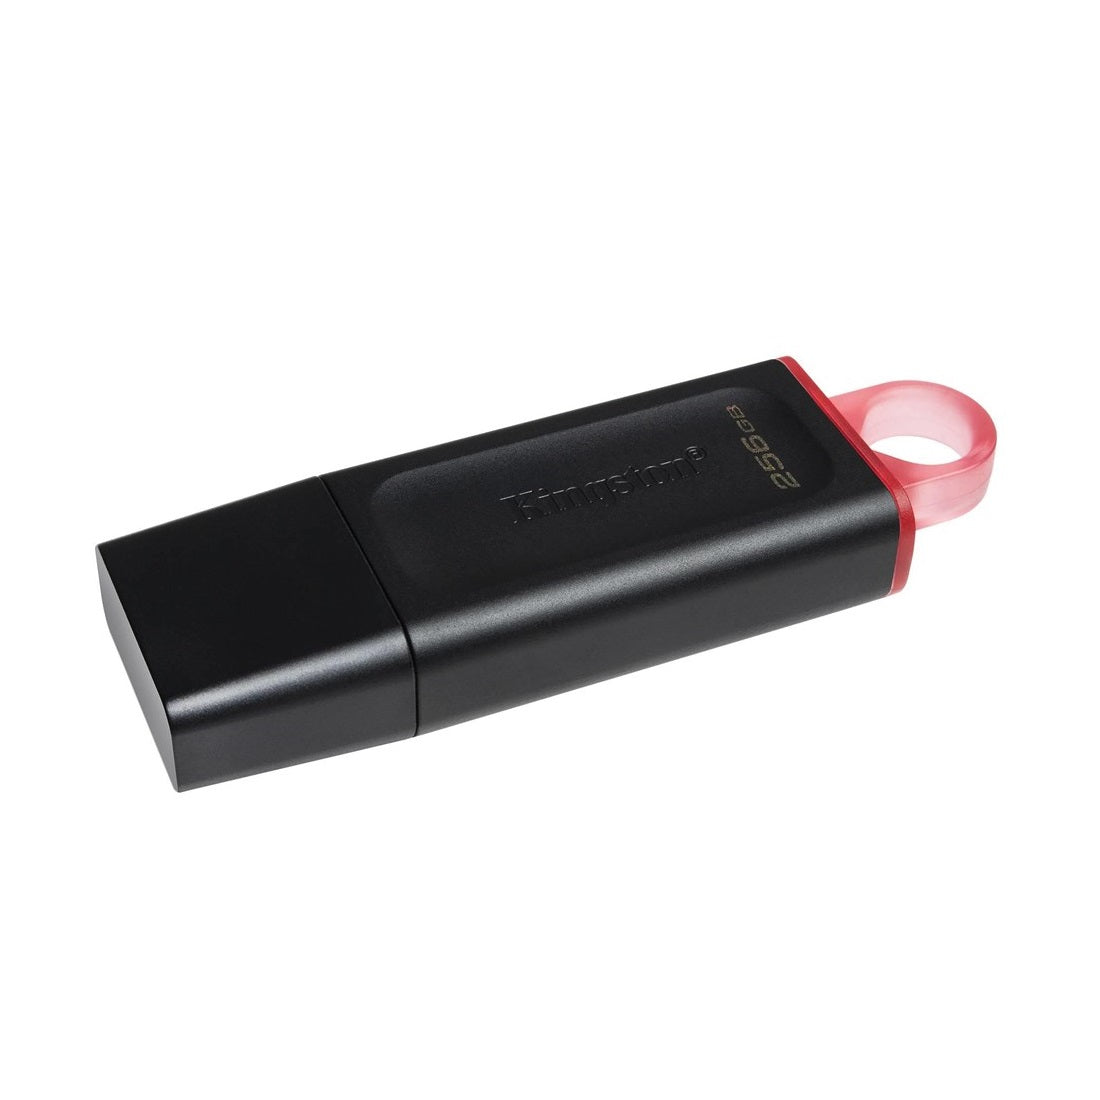 Kingston DataTraveler Exodia 256GB 3.2 USB Flash Drive - Black | 310023 from Kingston - DID Electrical